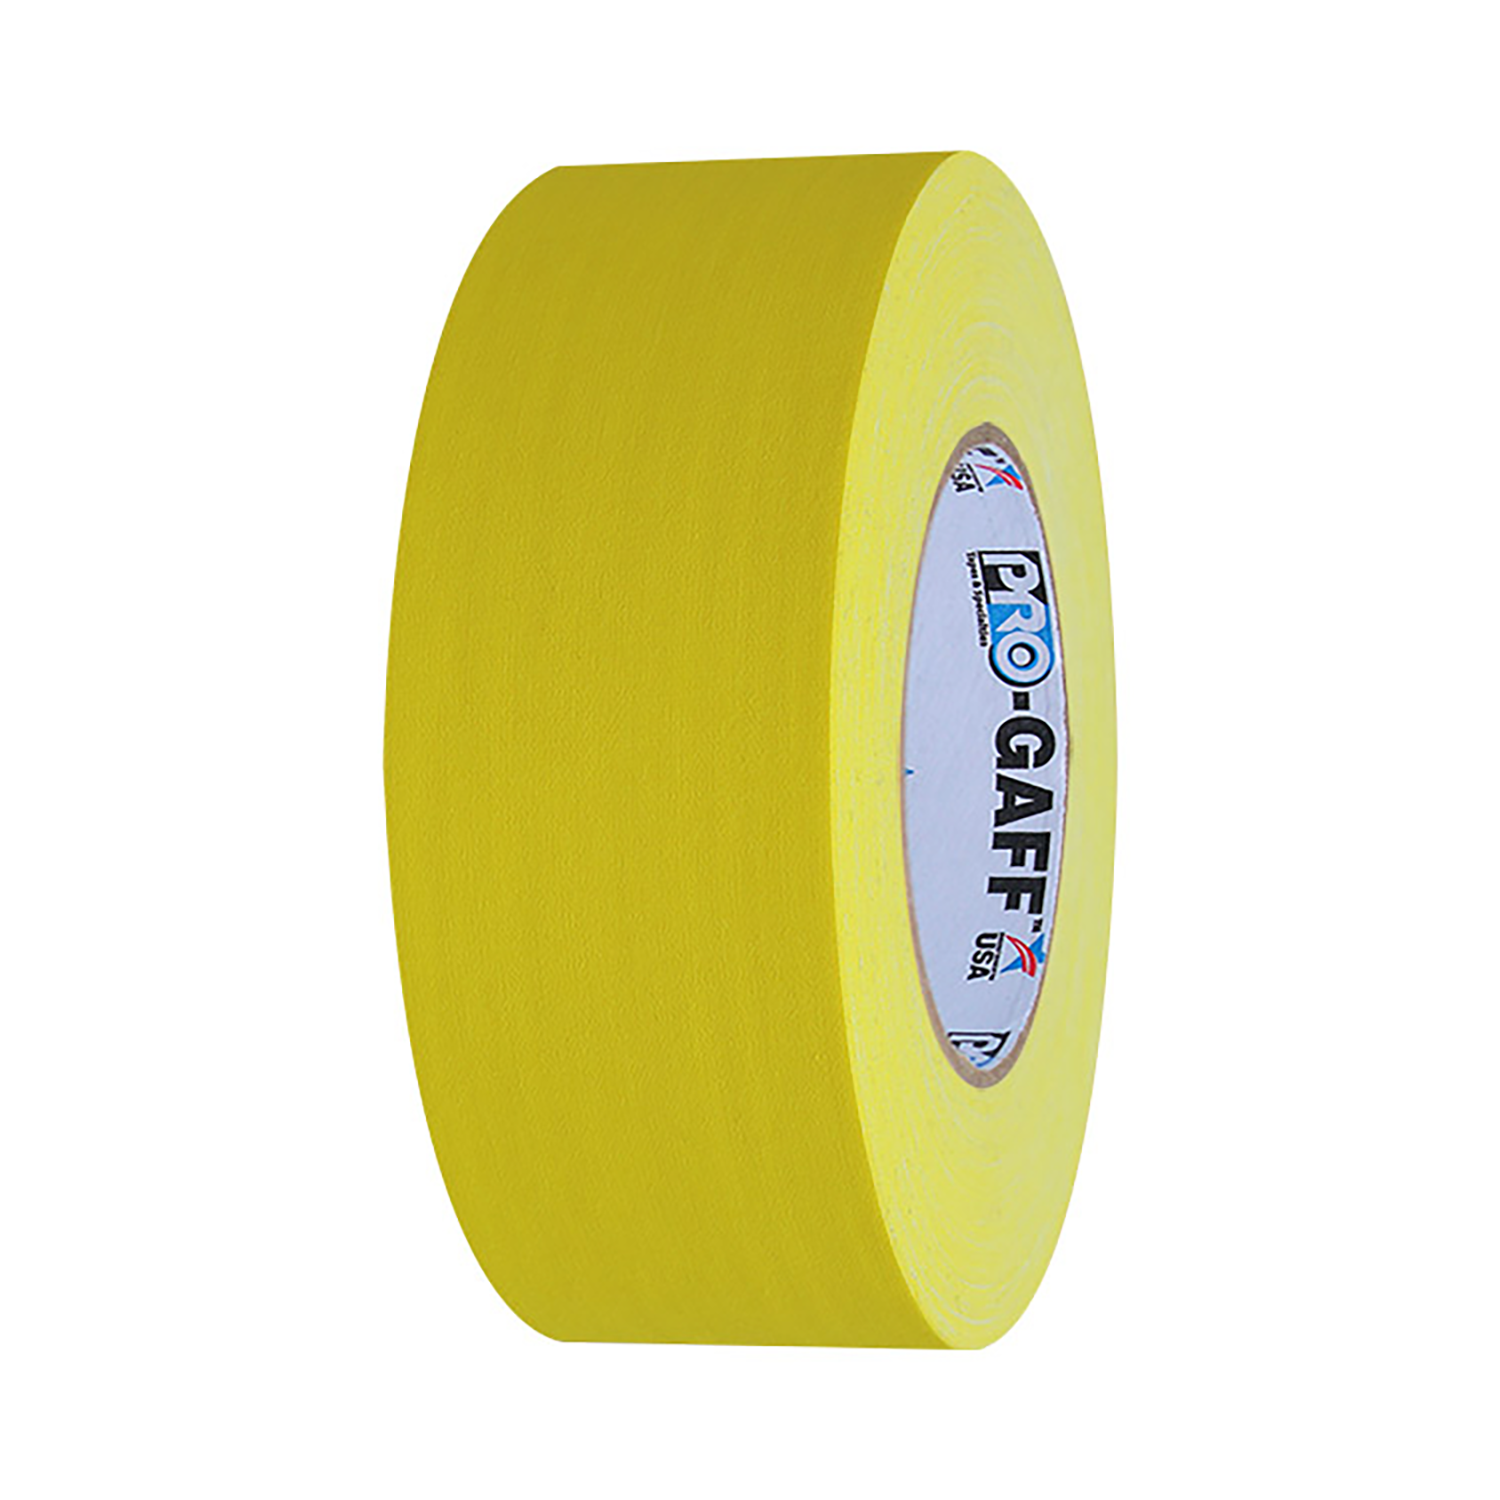 Pro Gaff Tape Cloth - Yellow - 55 Yards - 2"